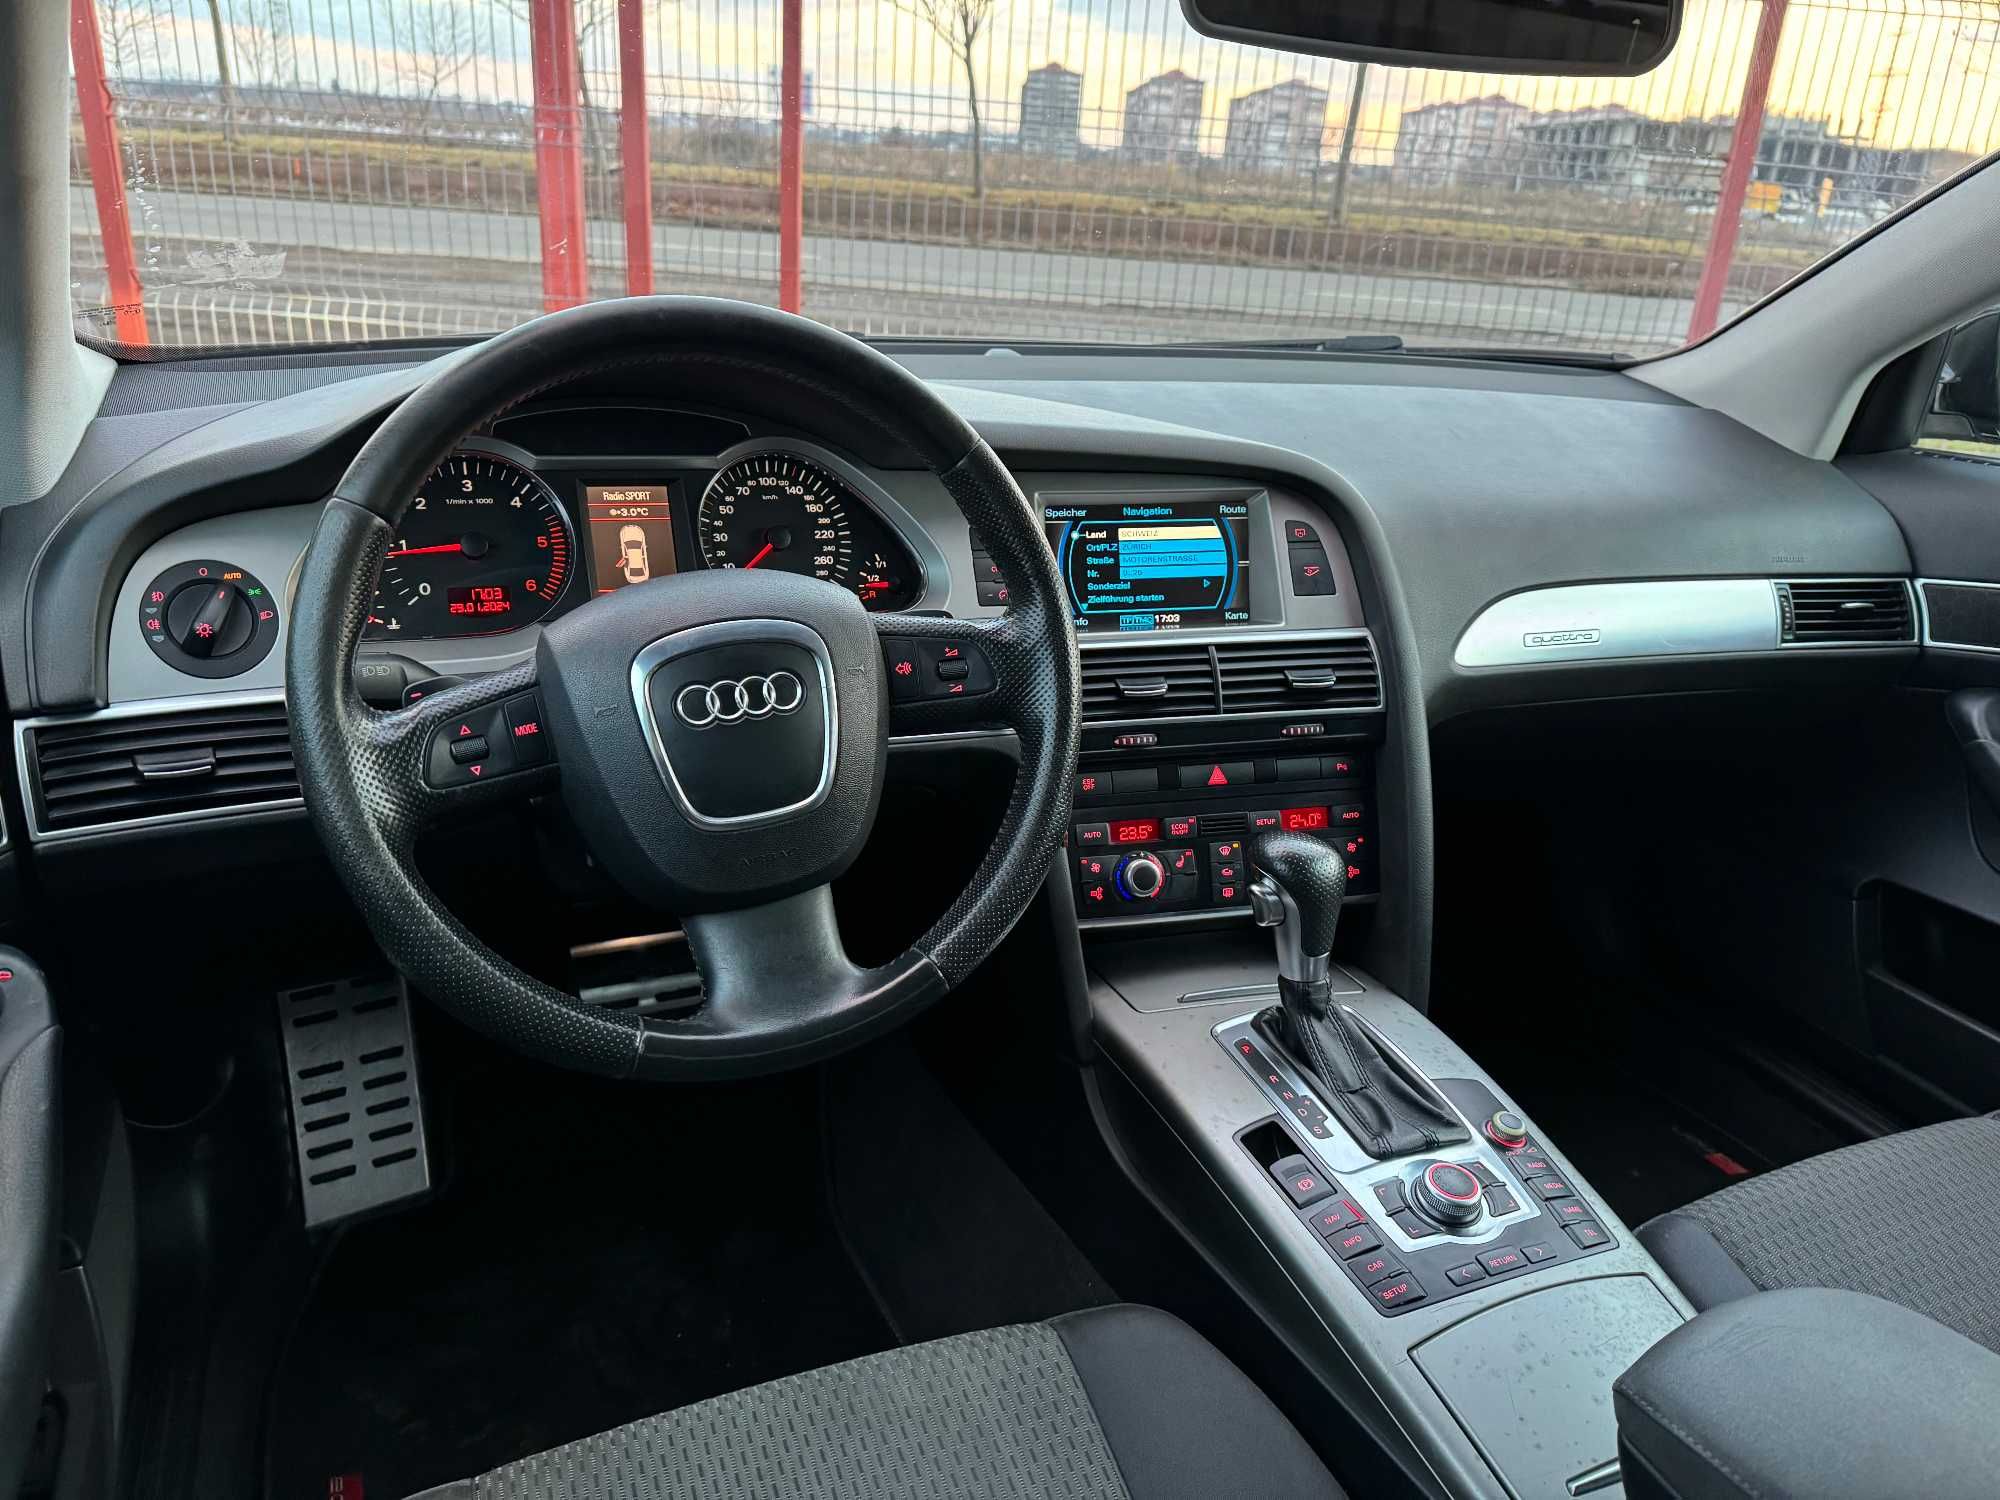 Audi A6 2.7 TDI 190CP Quattro/Automat/Xenon/Navi/Rate Fixe|Avans0